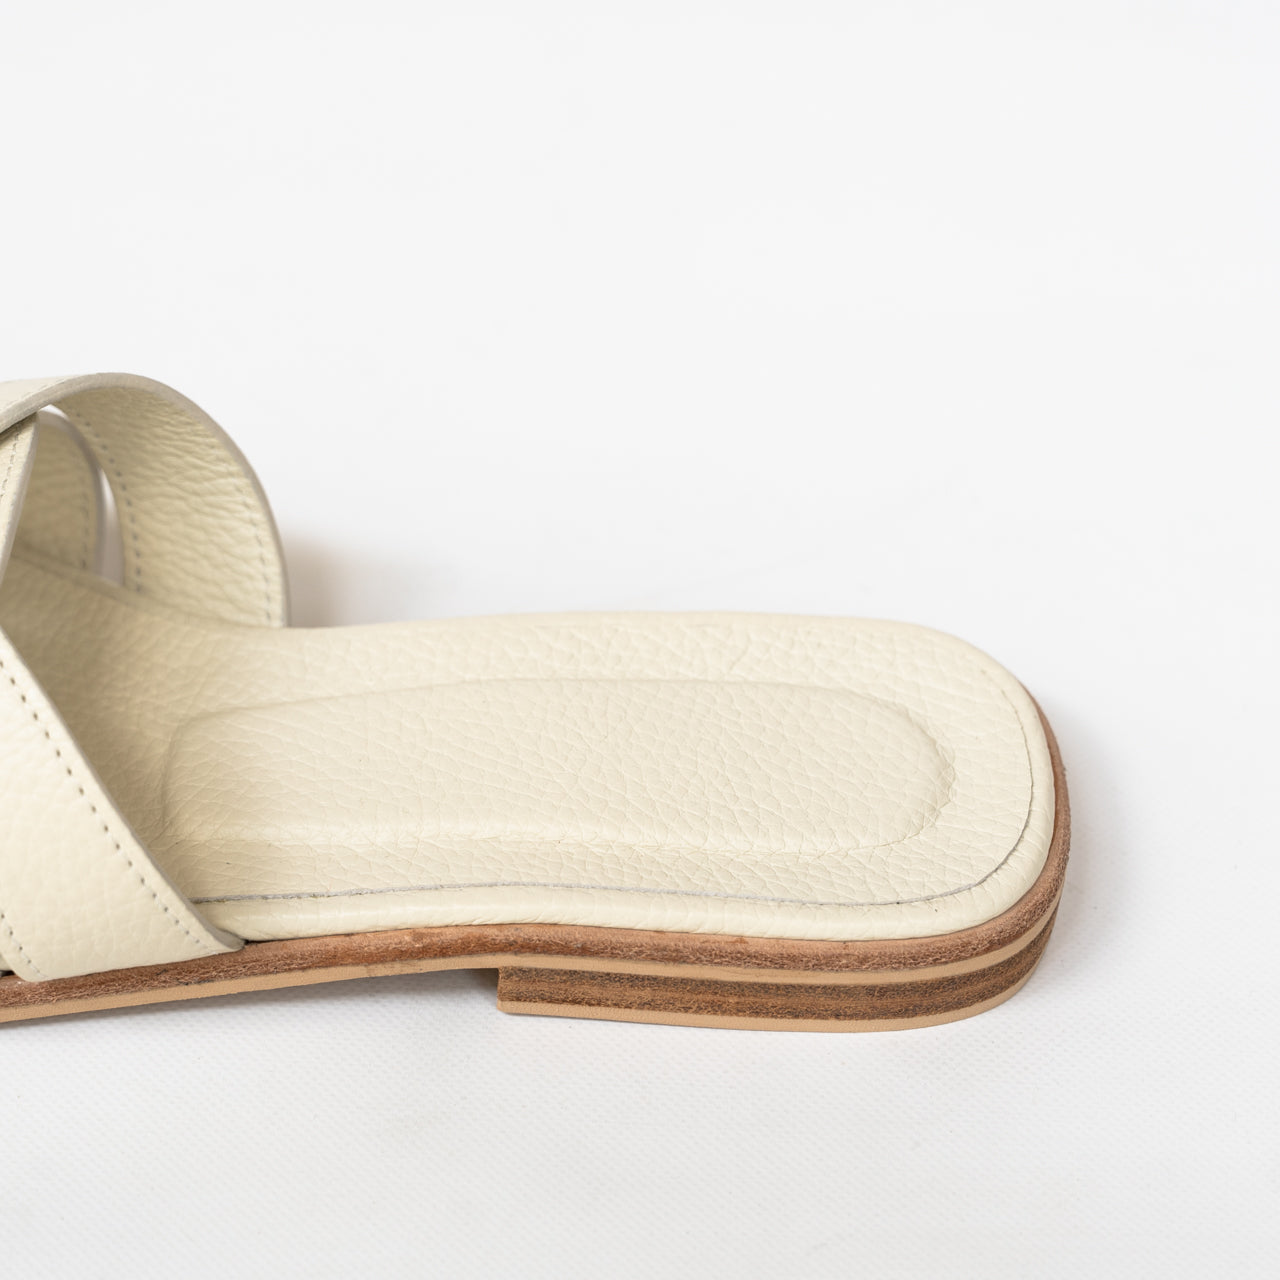 Leather flat sandals "Lupus" Cuir Mash/White